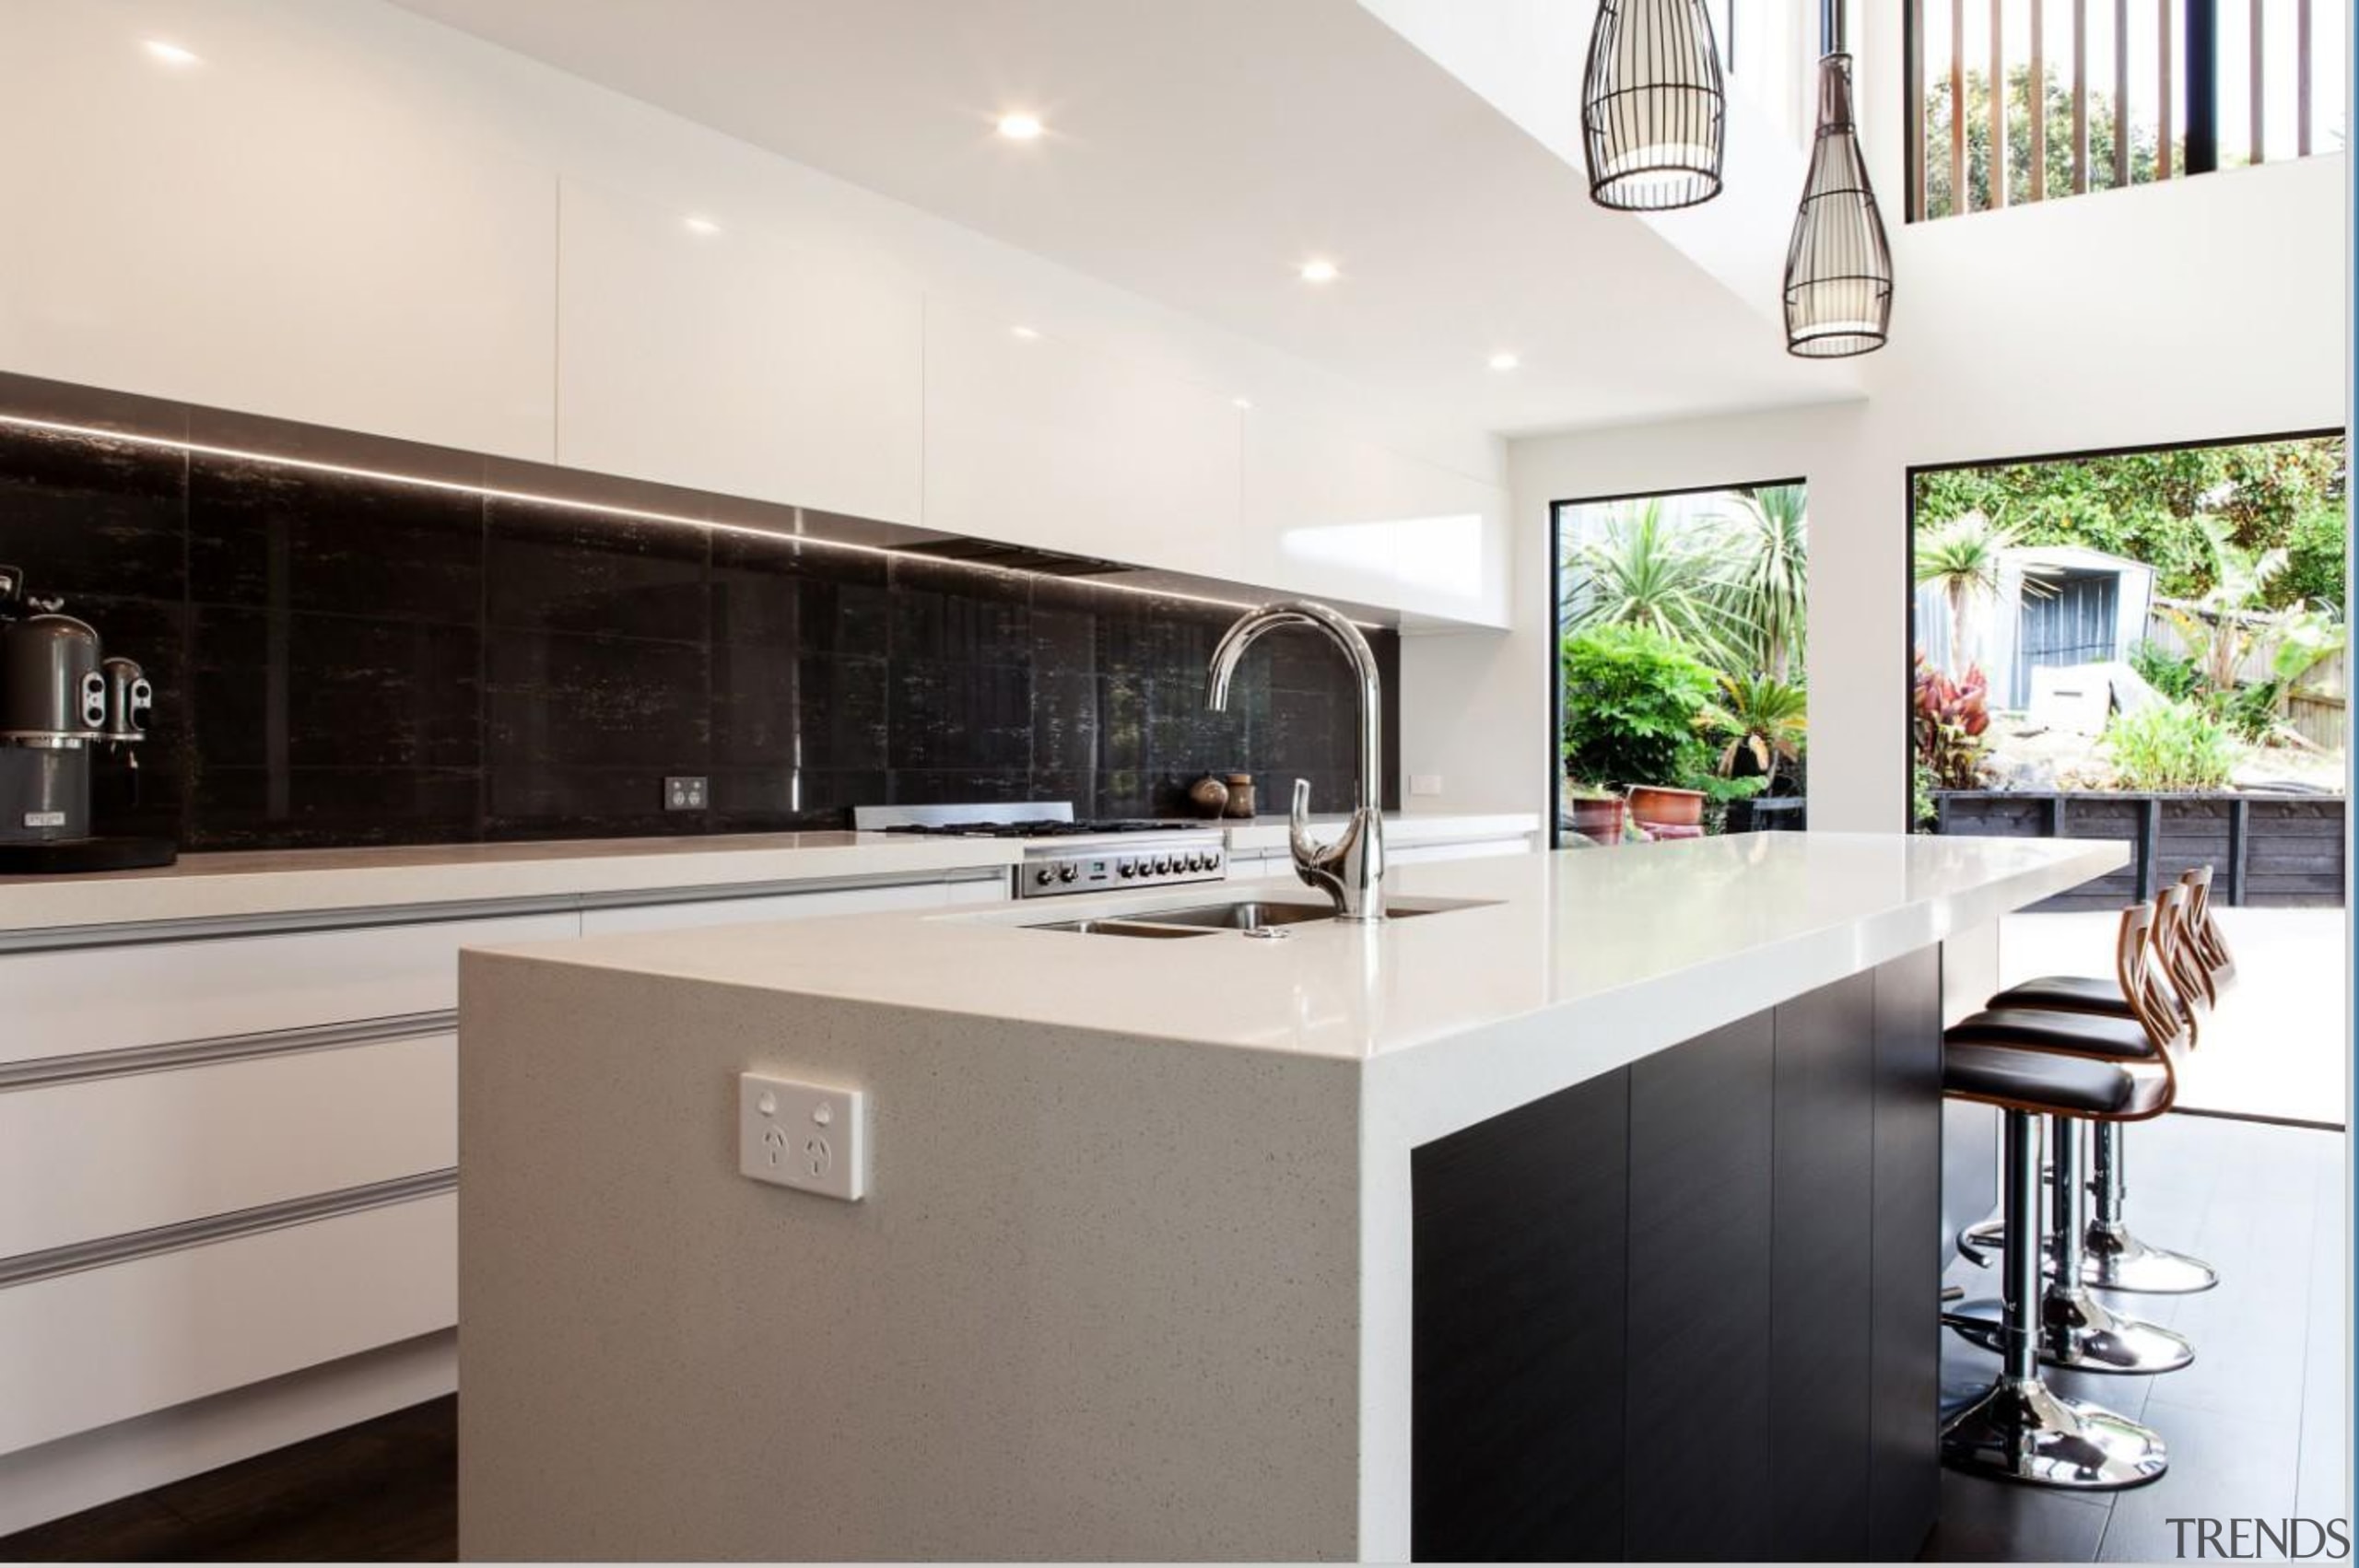 This new kitchen by Apollo Bathroom and Kitchen countertop, interior design, kitchen, real estate, white